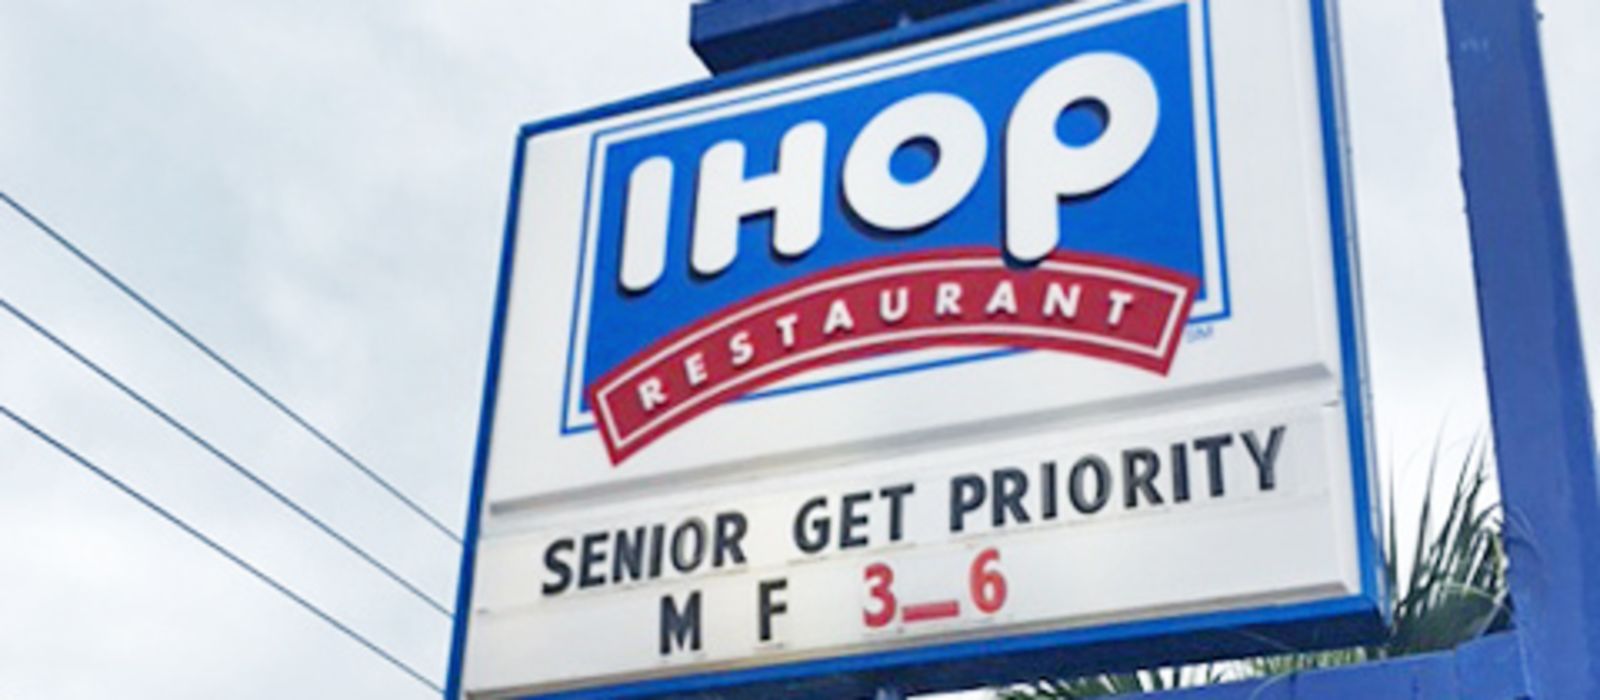 Reklameschild des IHOP Restaurant in St. Petersburg, Florida